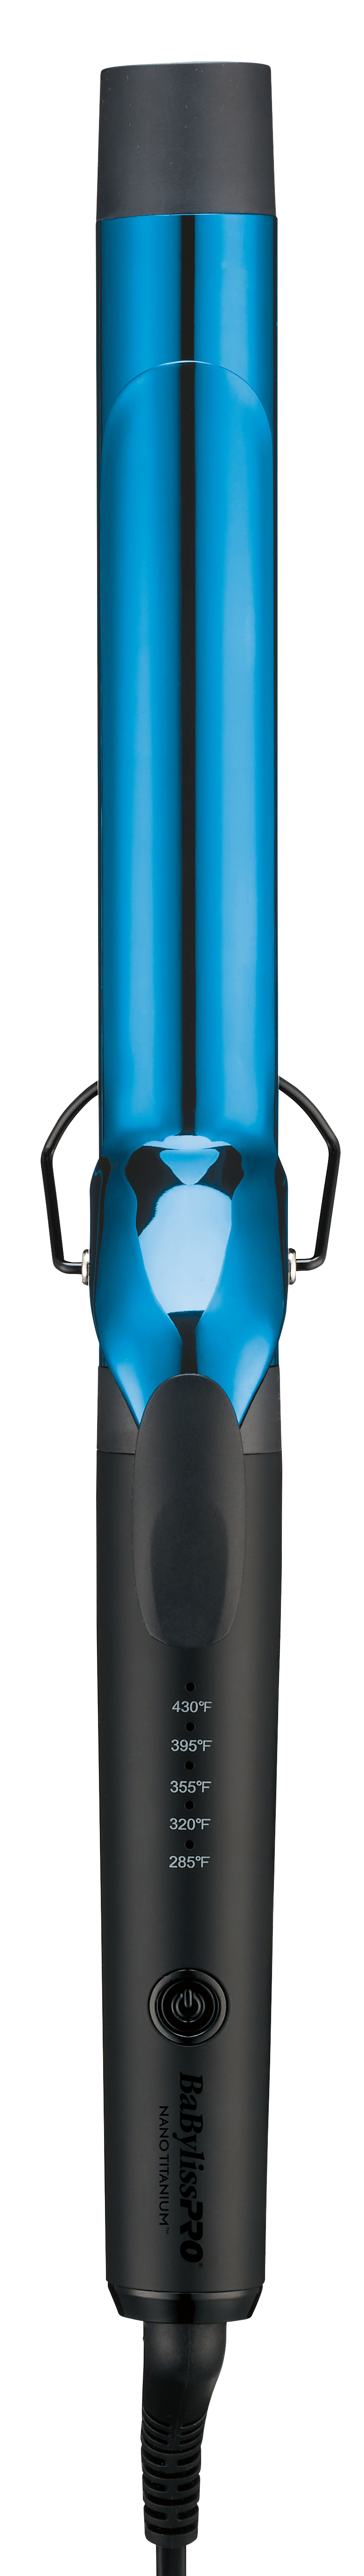 BaByliss PRO Limited Edition Black & Blue Nano Titanium Extended Barrel Curling Iron - 1.25" (BNTWMB125XLUC)